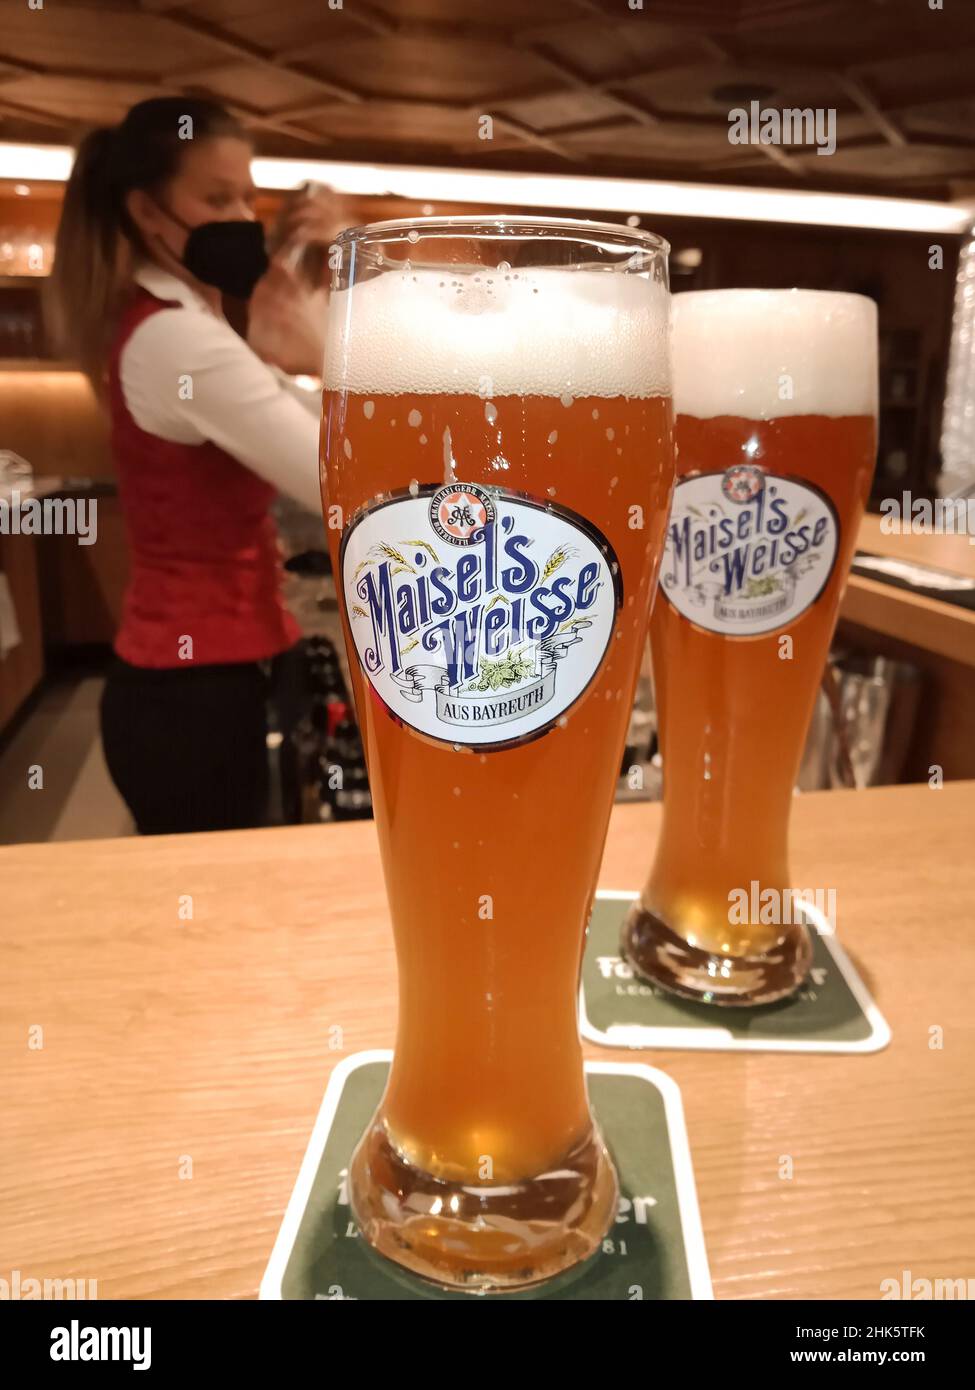 Weizen Bier (wheat beer) on a bar in Austria. Stock Photo